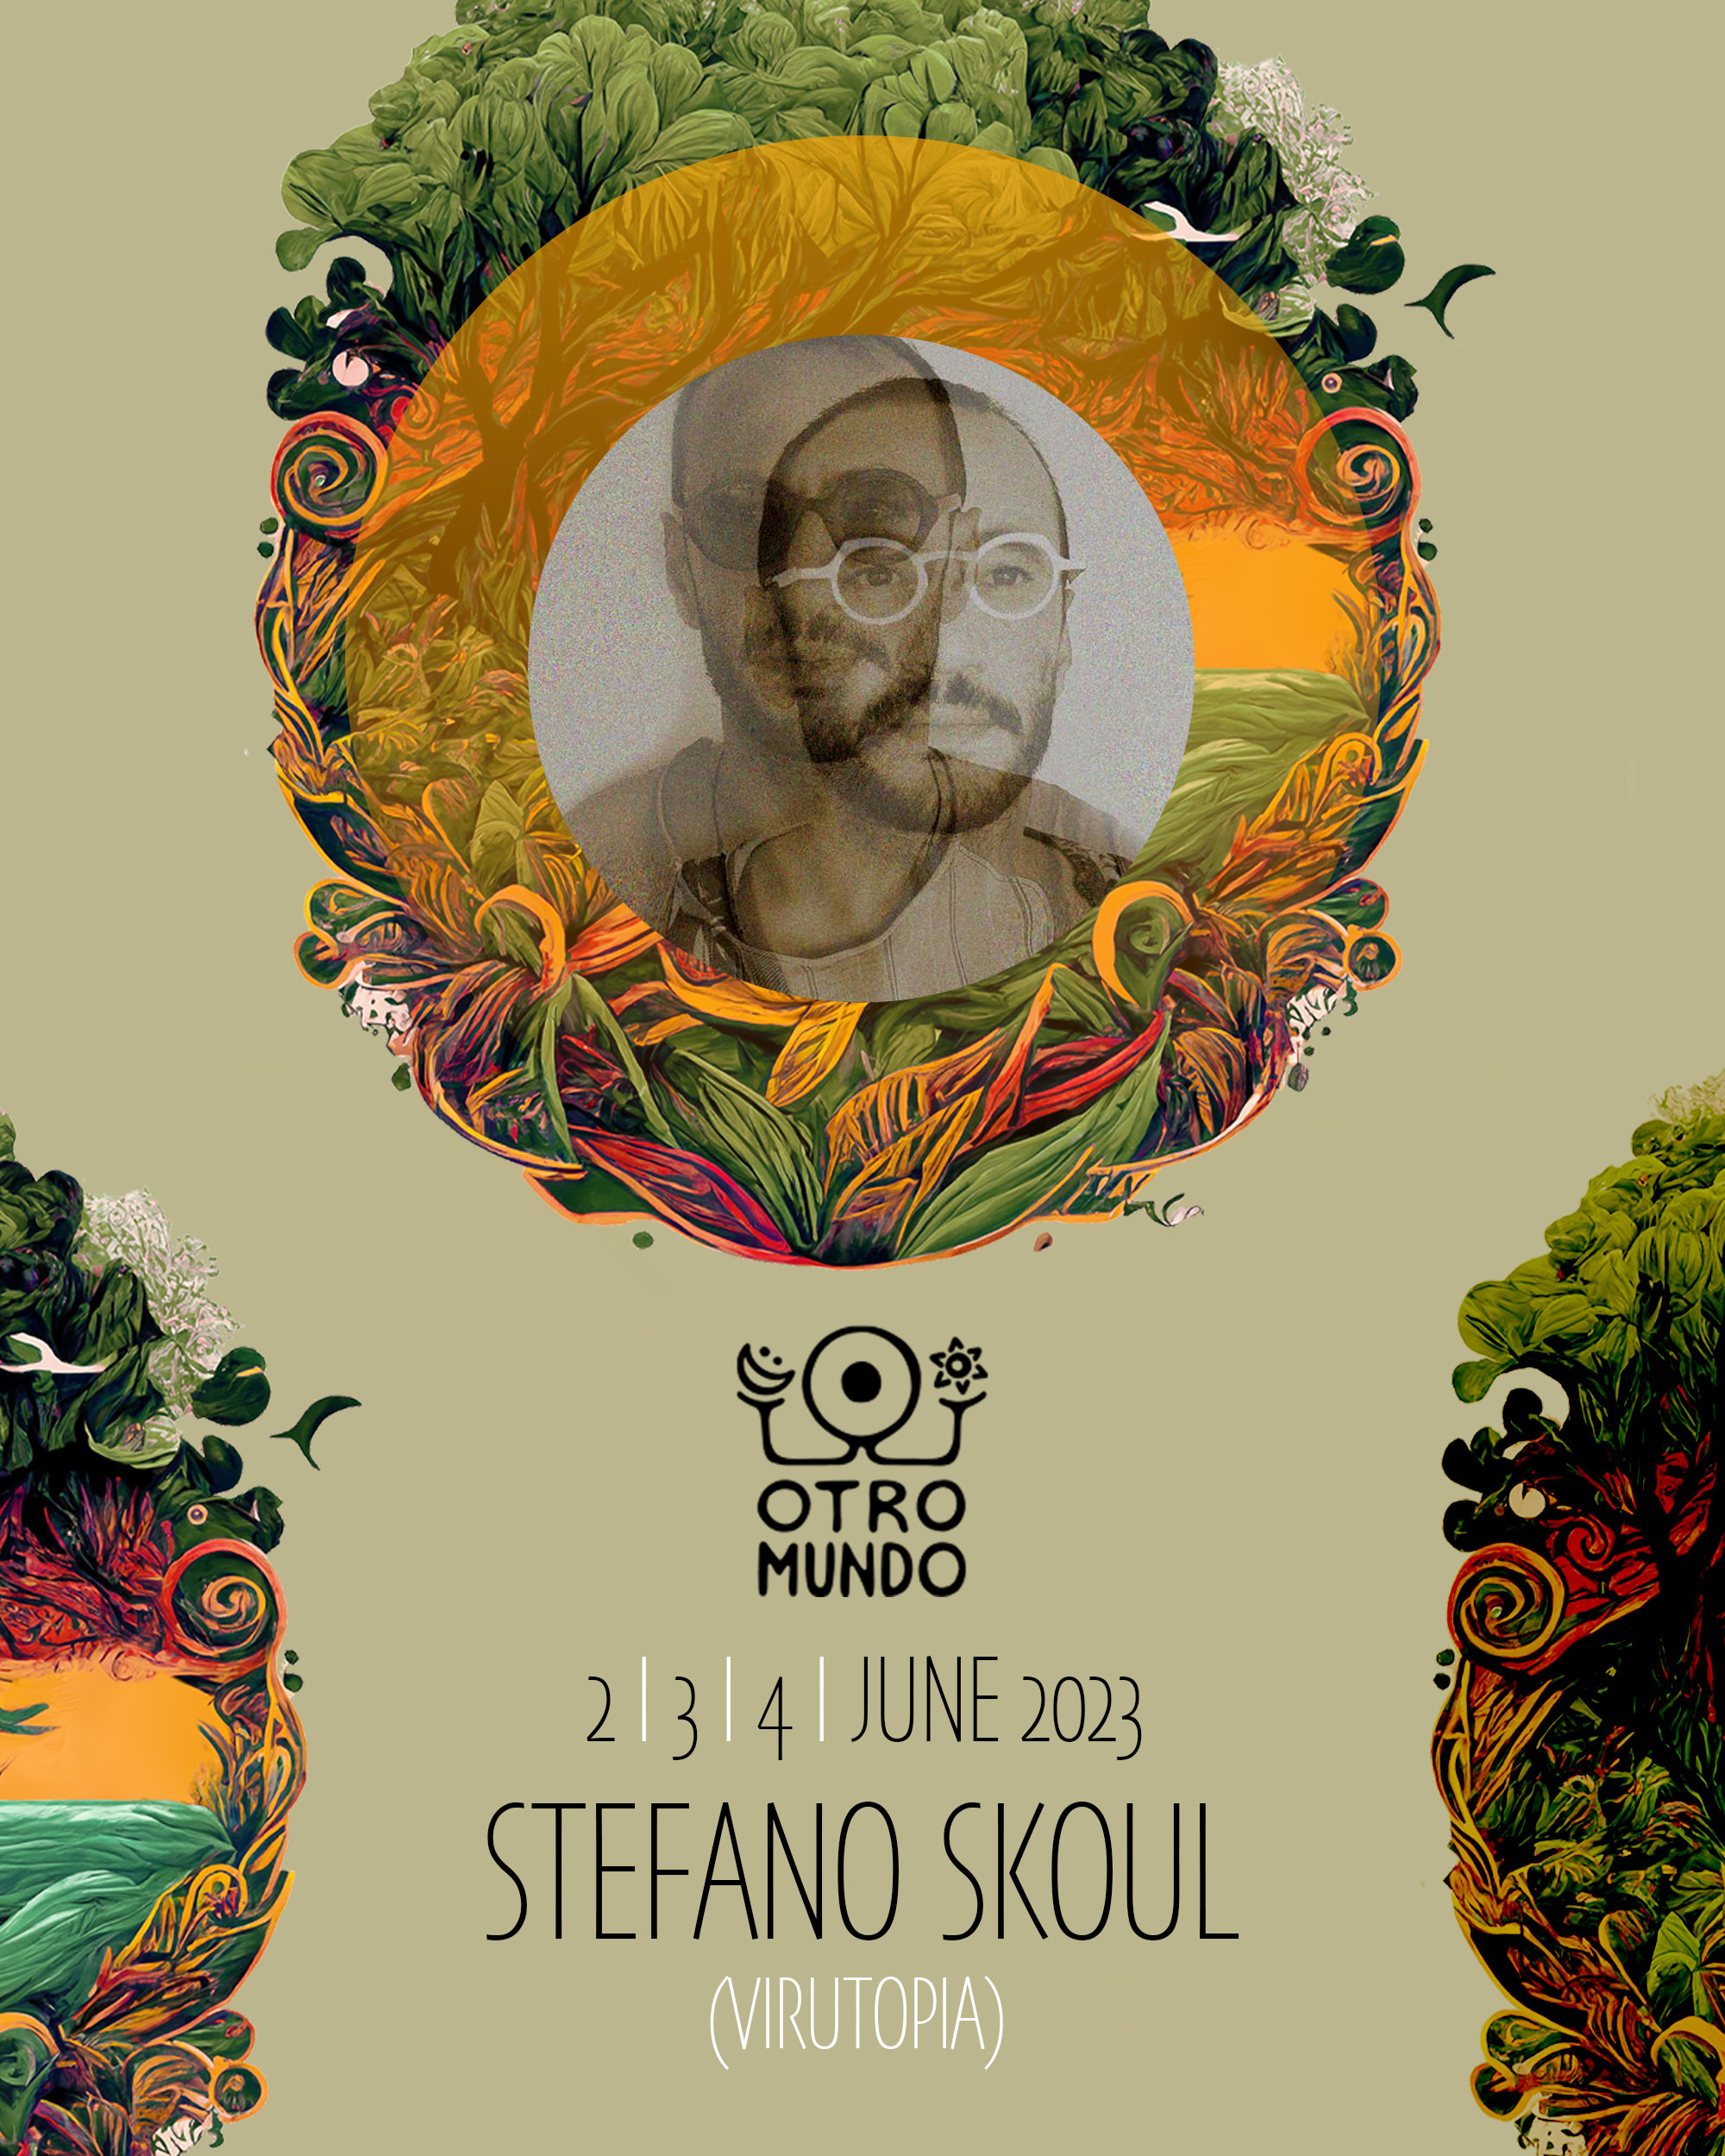 Stefano Skoul